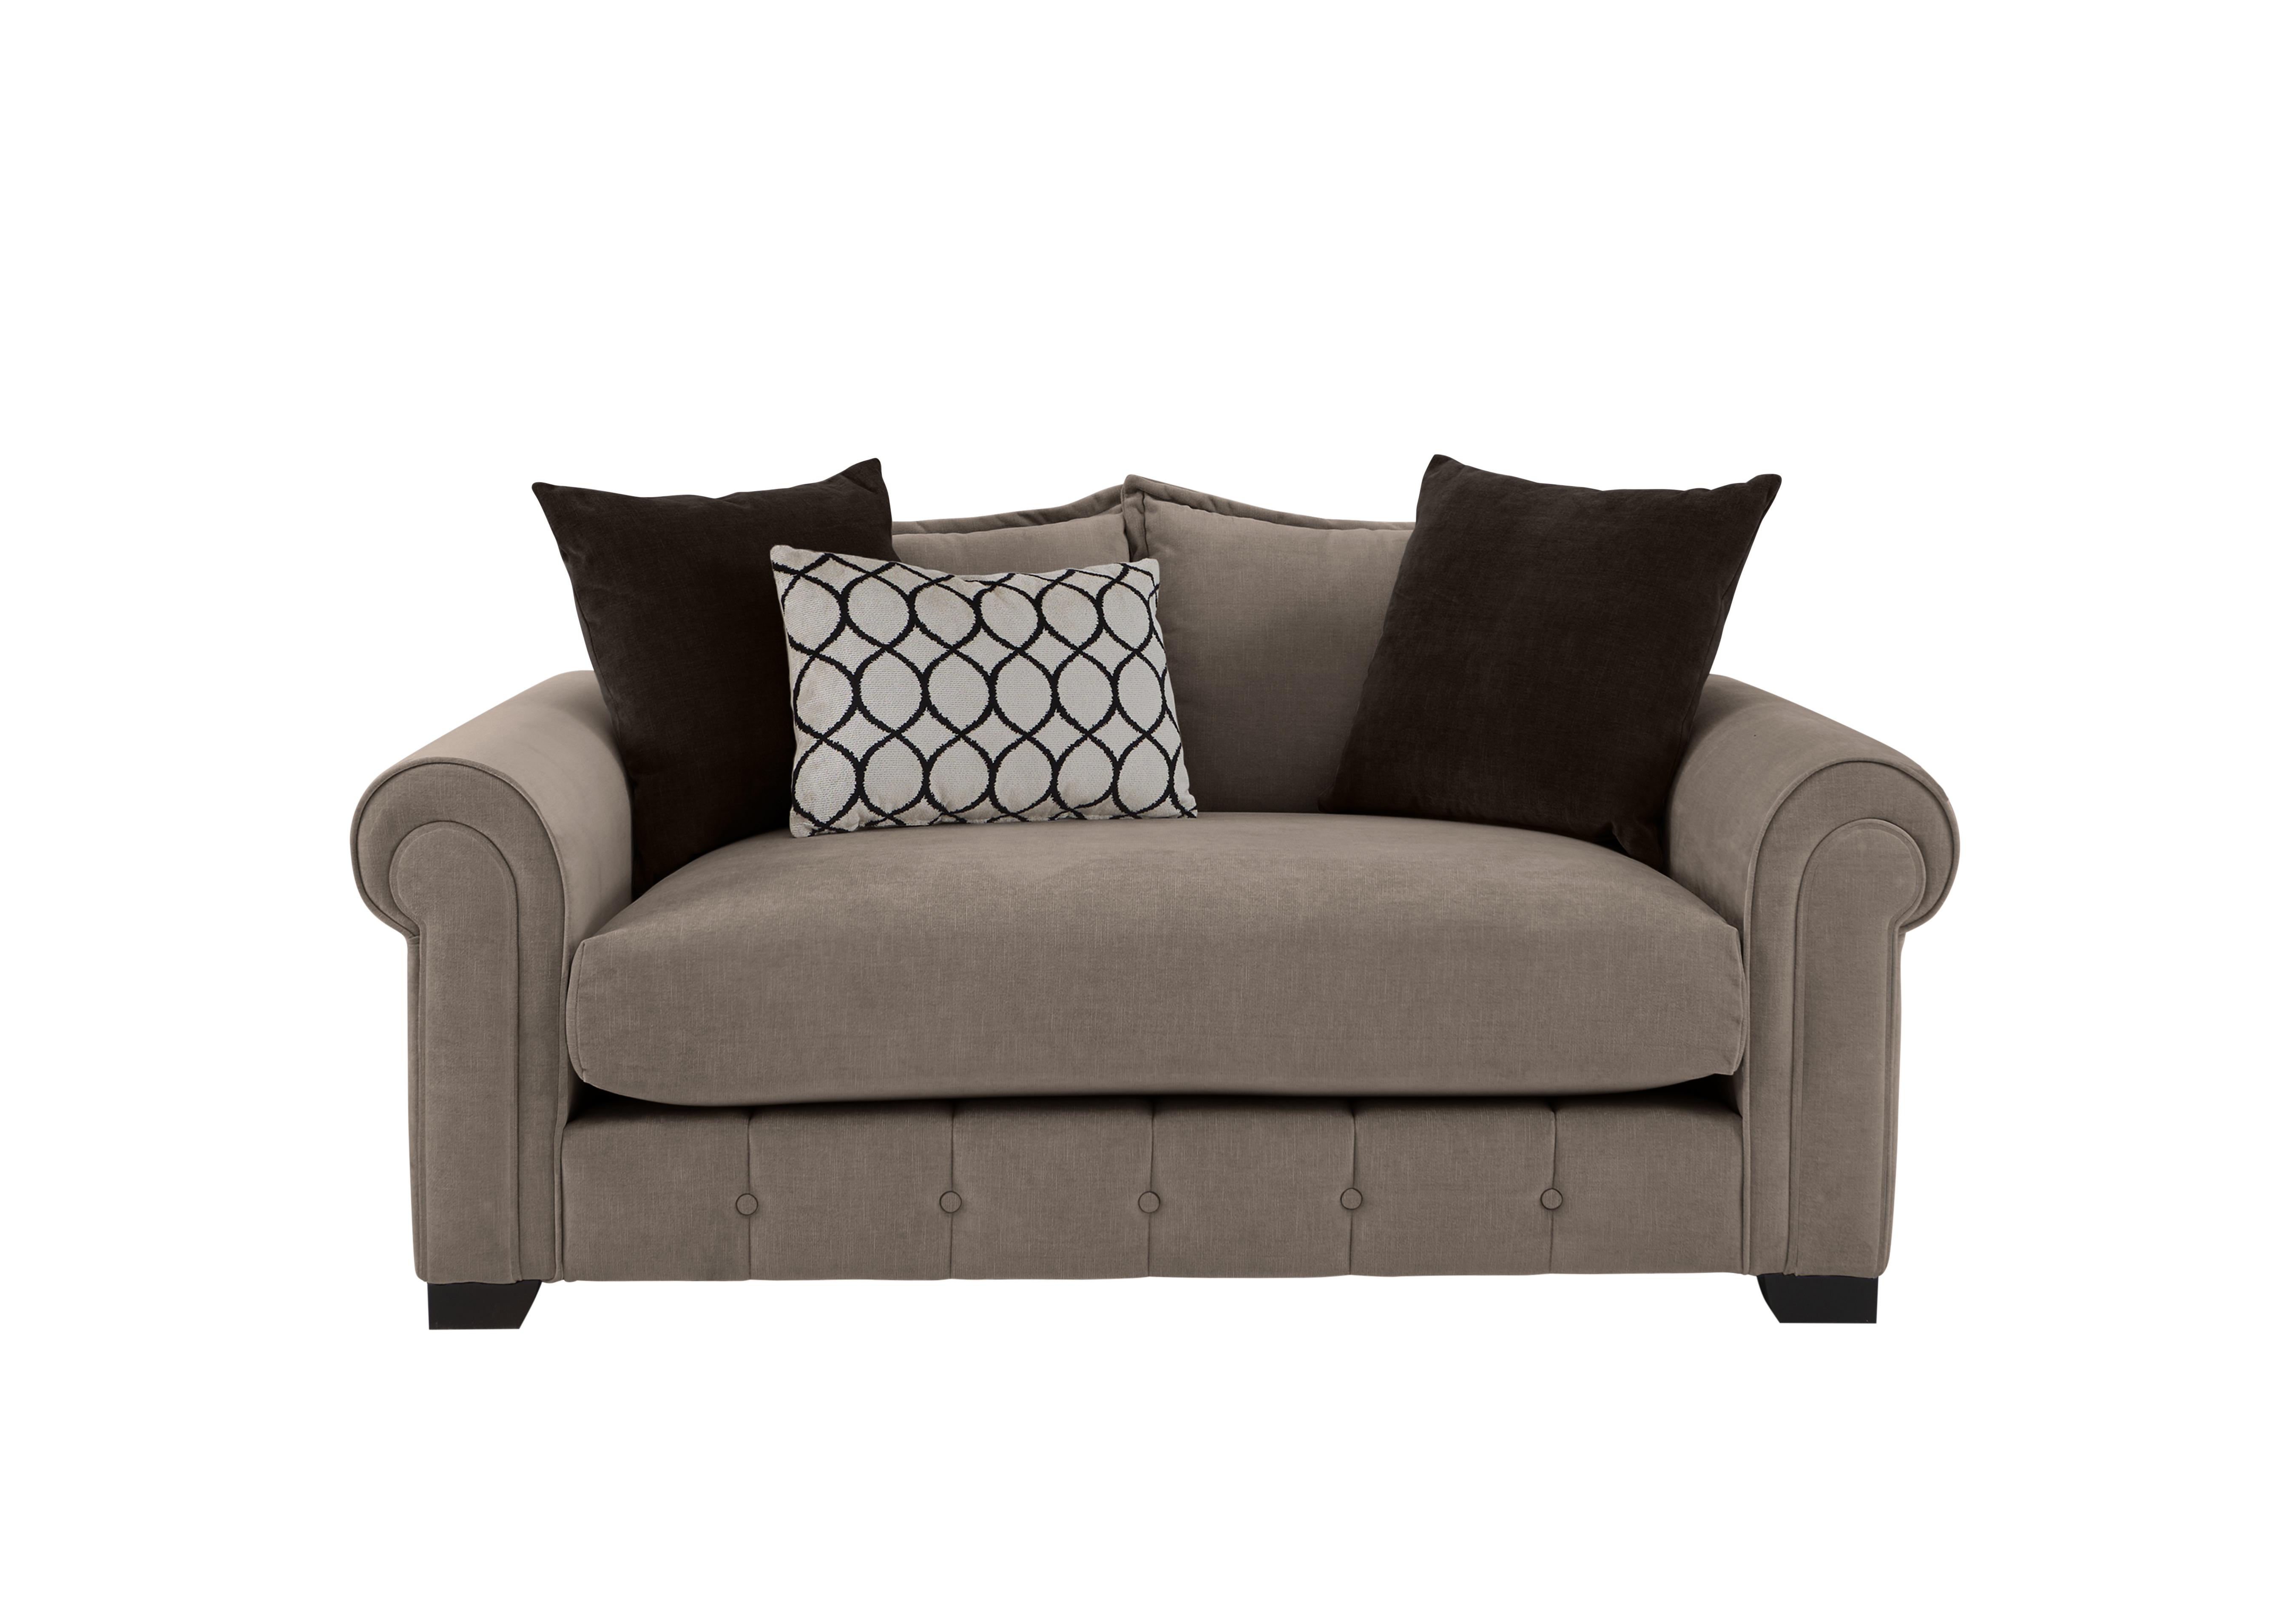 Sumptuous 2 Seater Fabric Sofa in Chamonix Wicker Dk/Self on Furniture Village